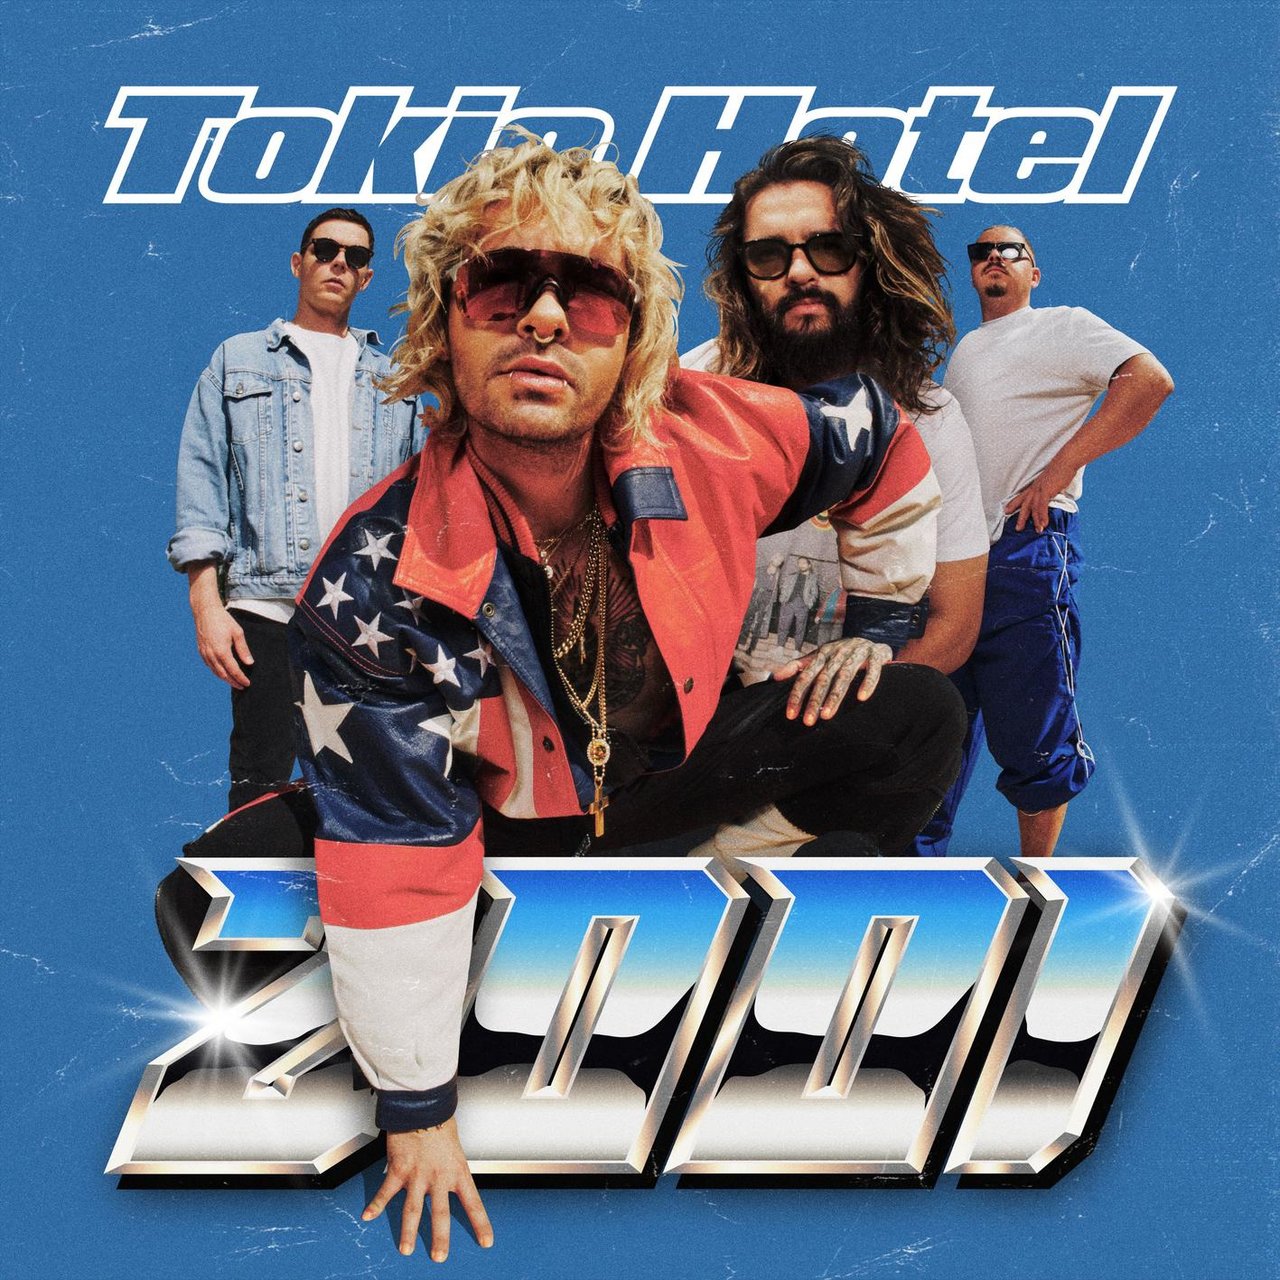 Tokio Hotel 2001 cover artwork